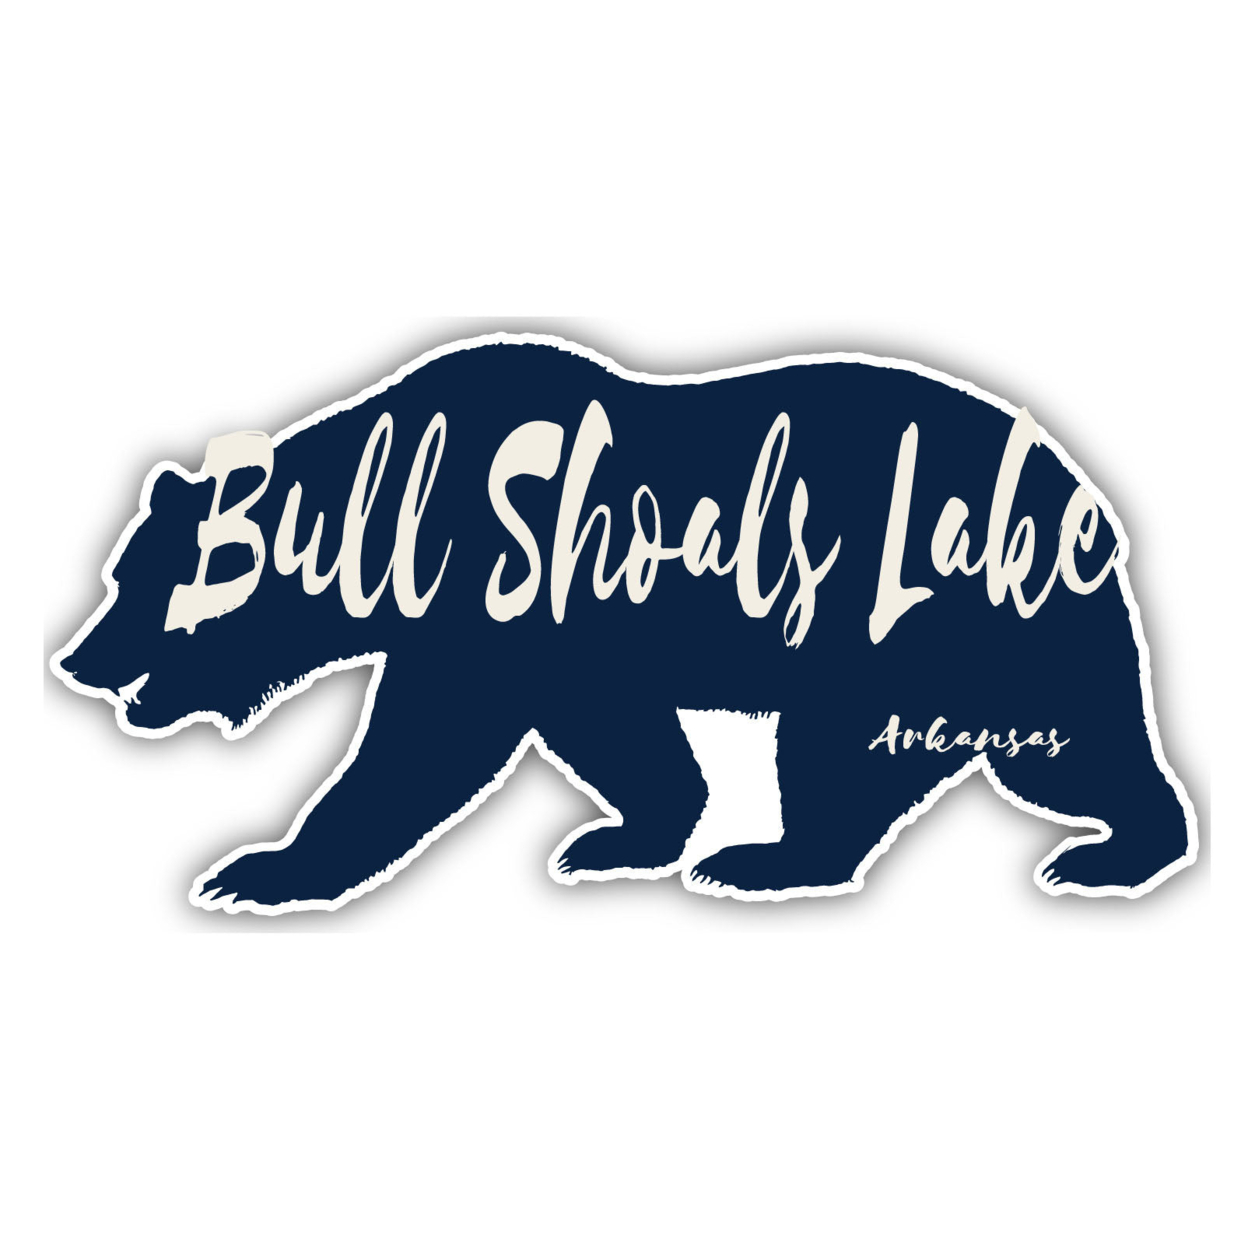 Bull Shoals Lake Arkansas Souvenir Decorative Stickers (Choose Theme And Size) - Single Unit, 12-Inch, Adventures Awaits